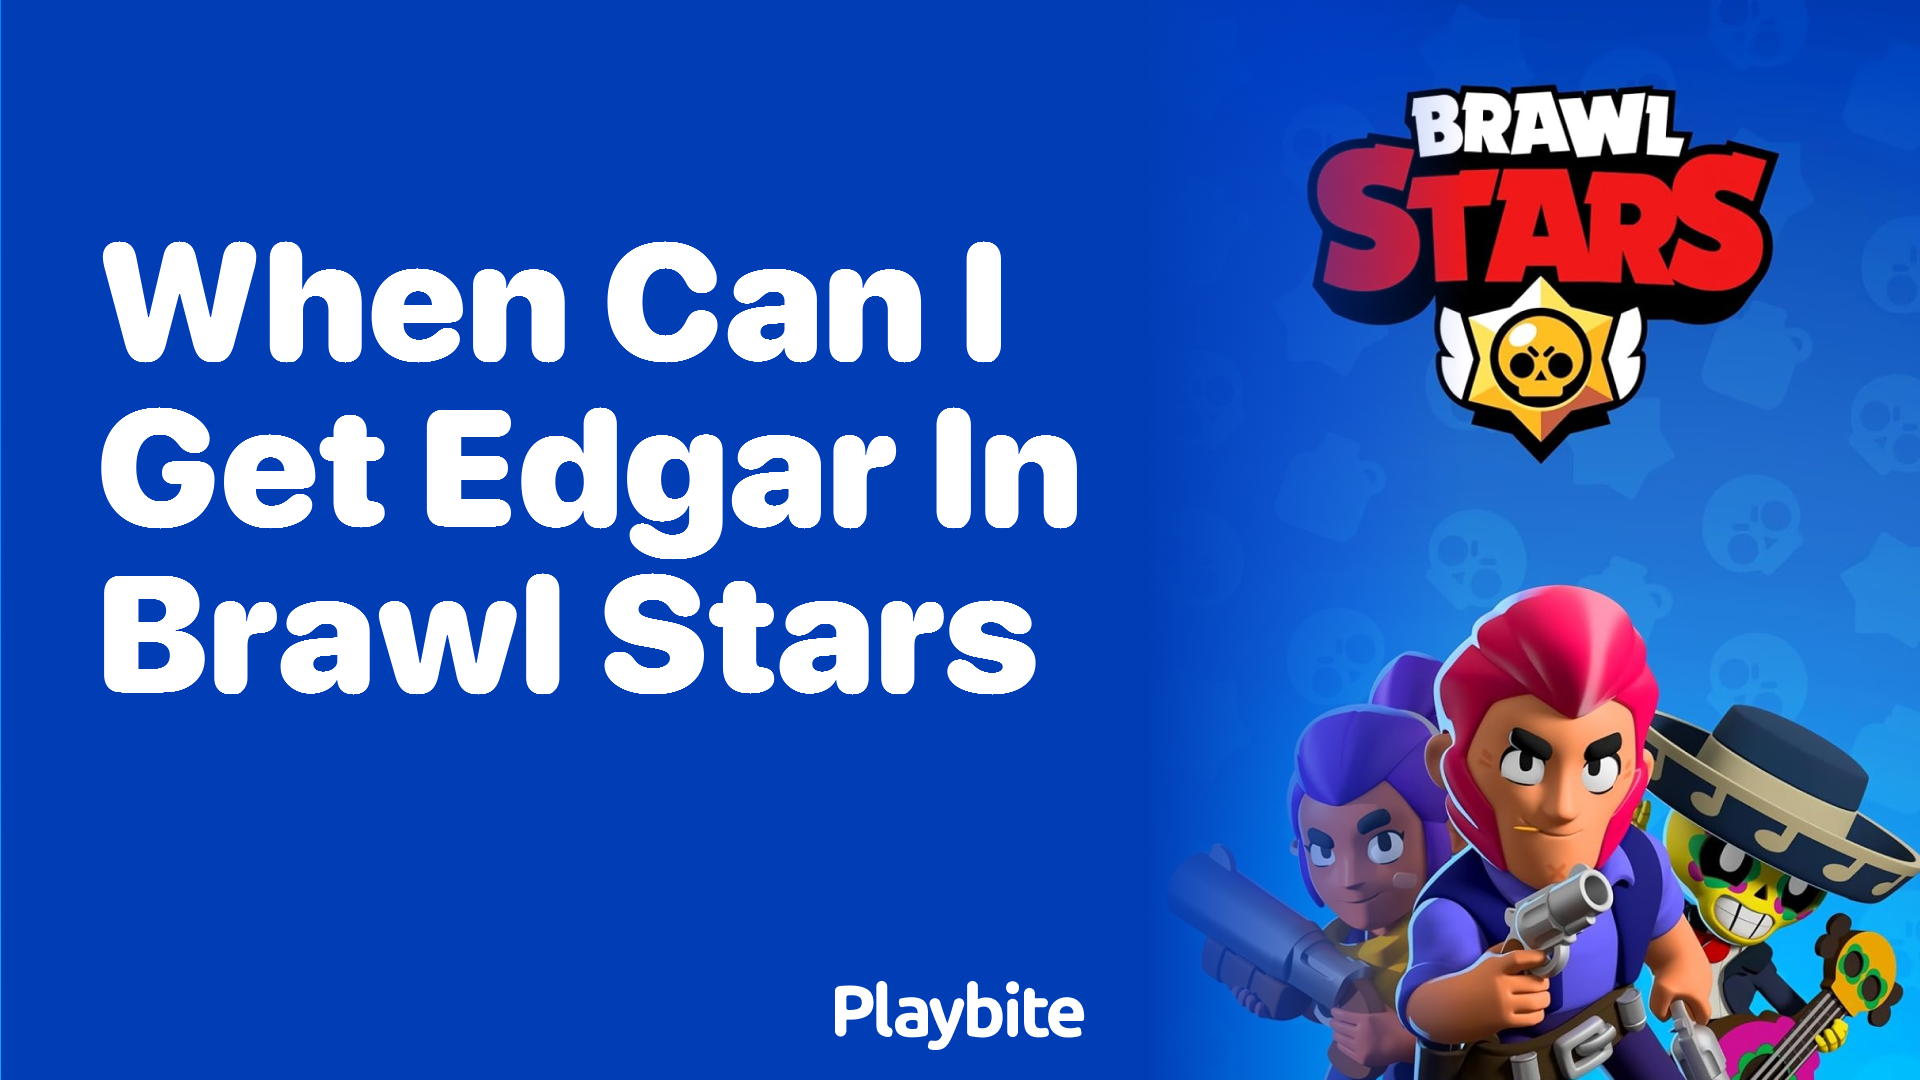 Edgar Brawl Stars release date